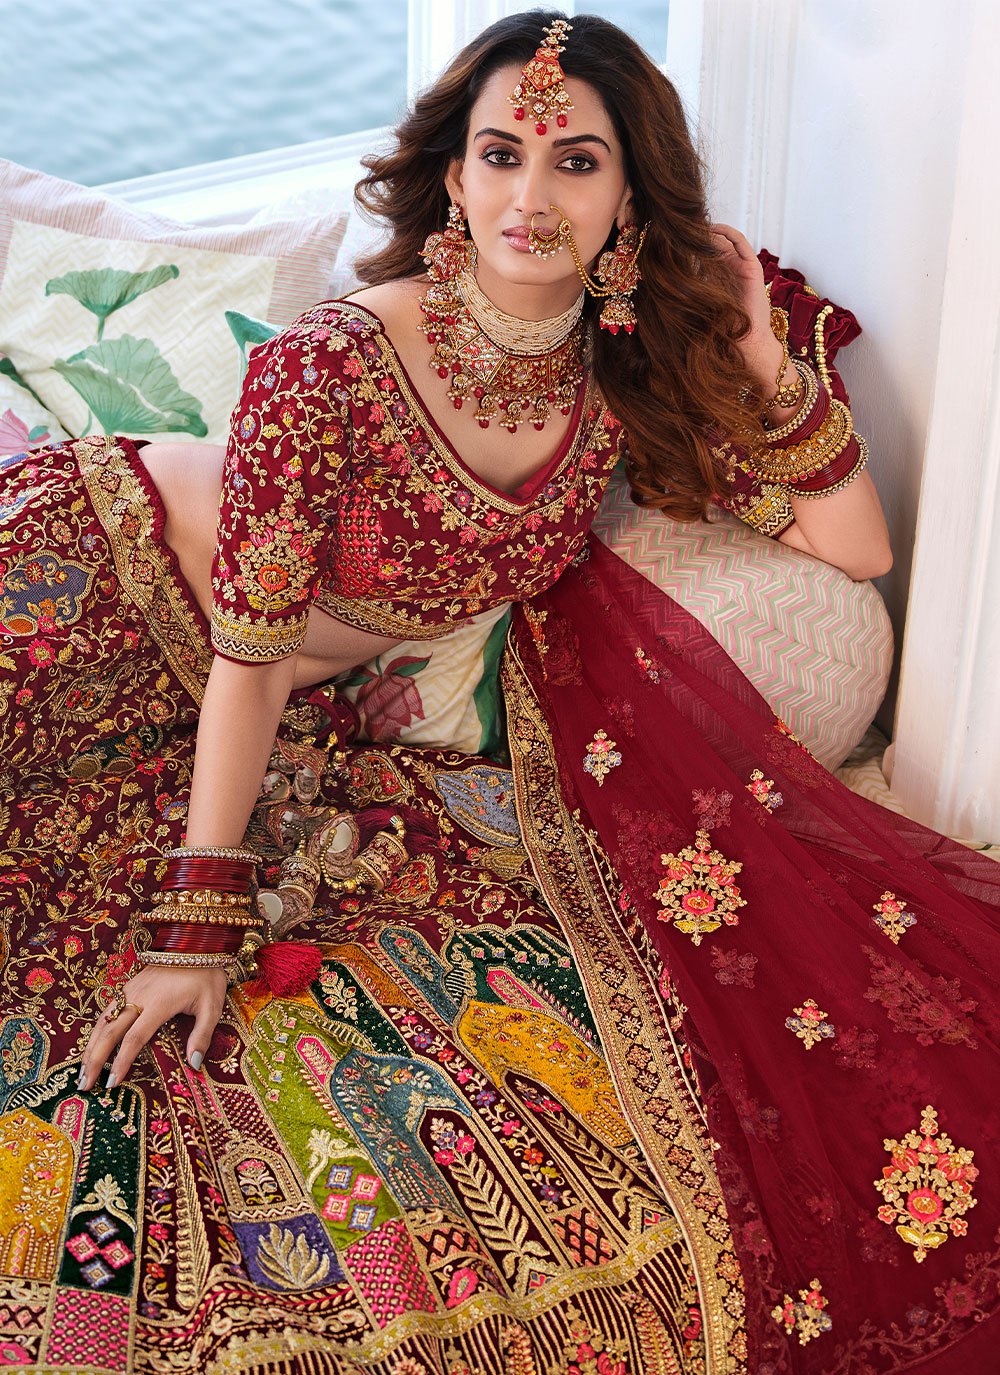 Buy Natural Fawn Lattice Patterned Mirrored Bridal Lehenga Online in India @ Mohey - Lehenga for Women